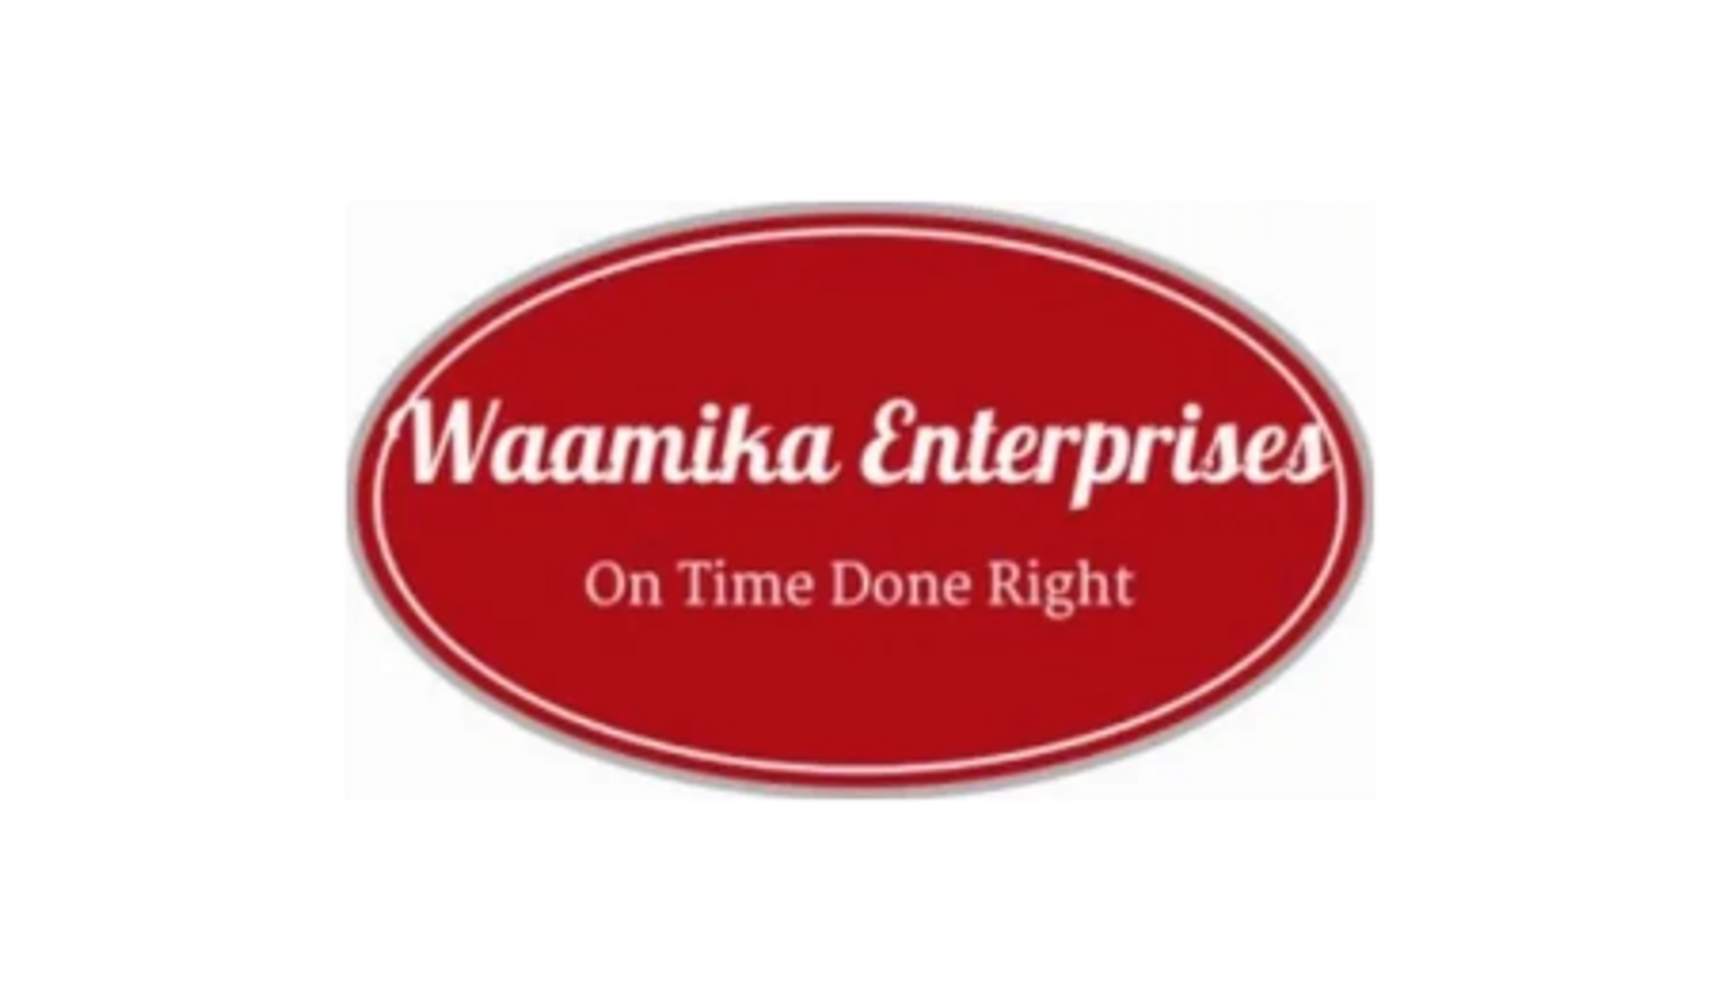 Waamika enterprises - The Wholesale Store.